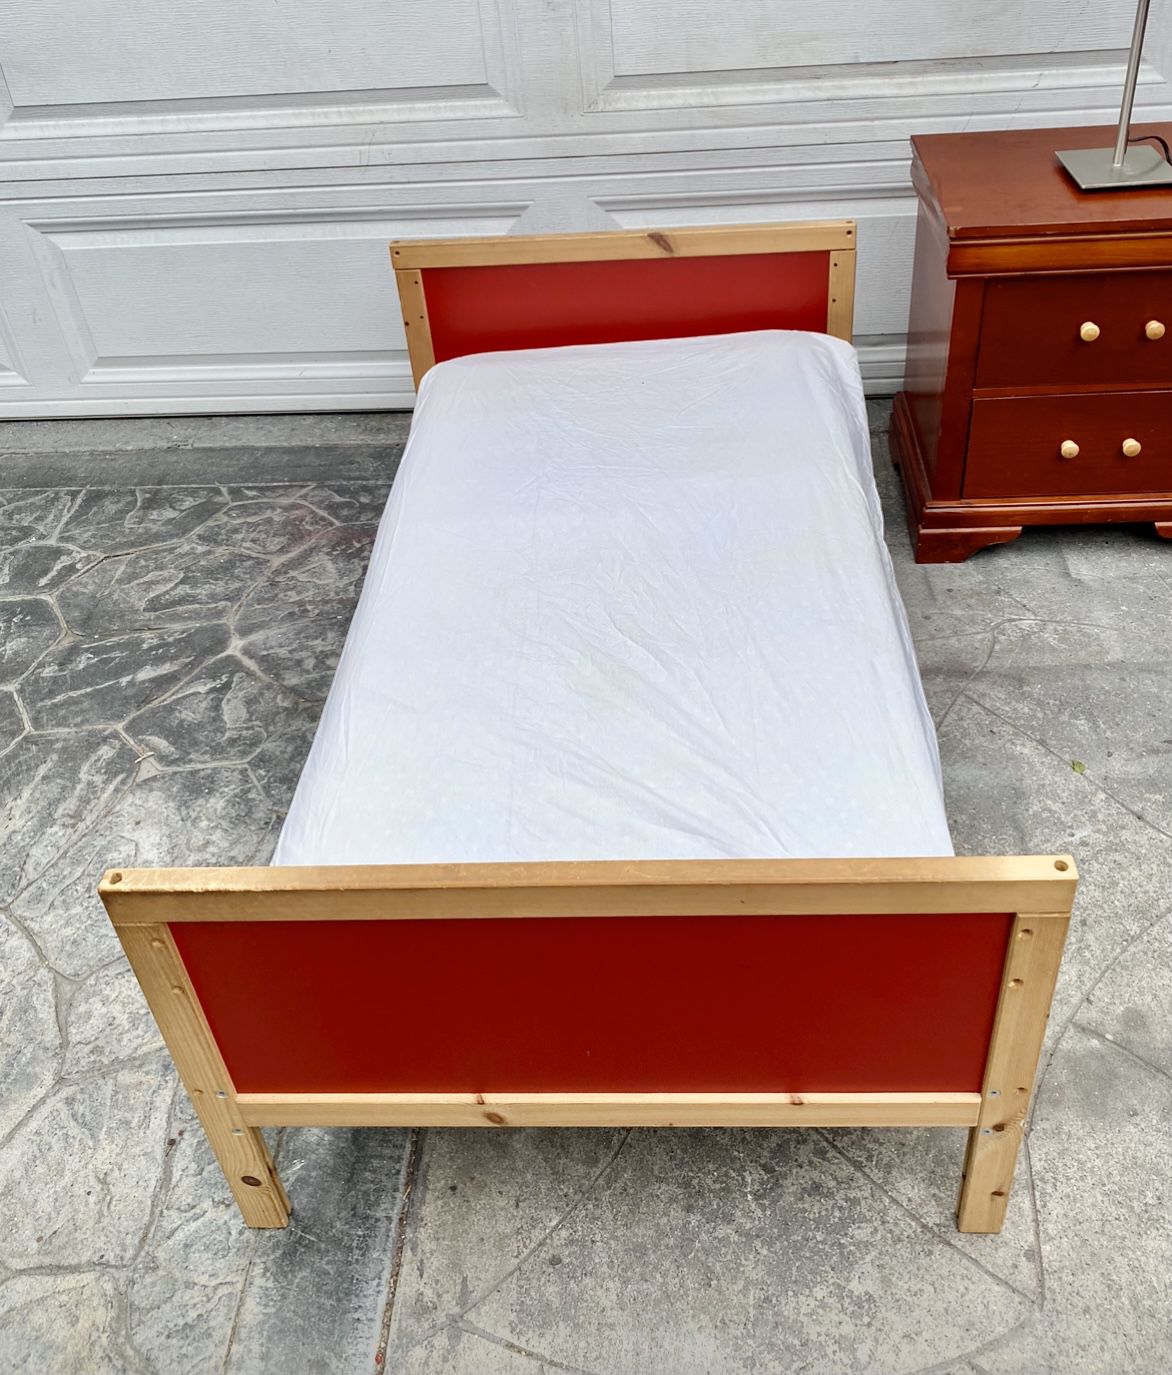 Red wooden toddler bed $15, mattress $10.